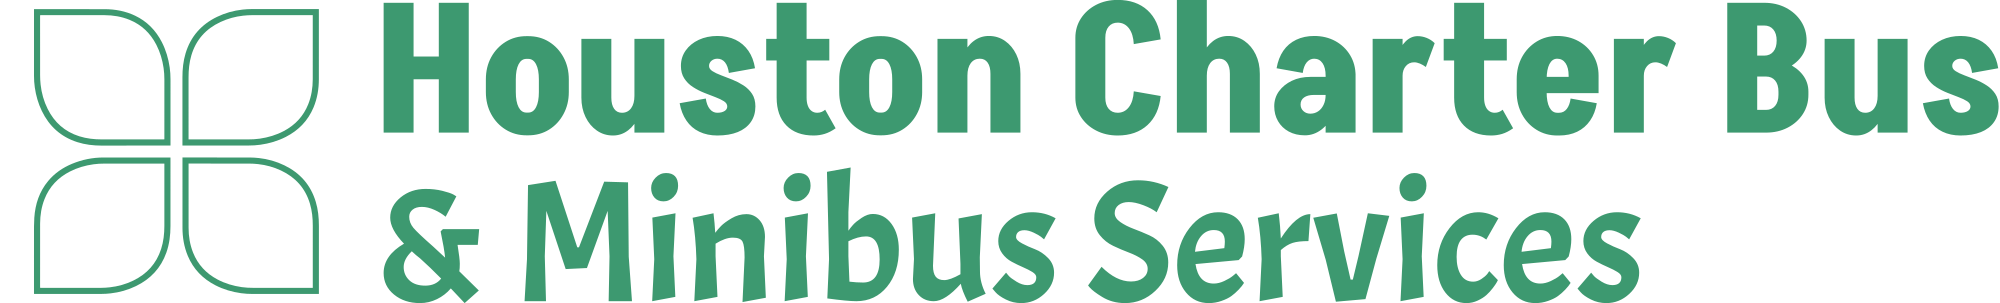 Charter Bus Company Houston logo